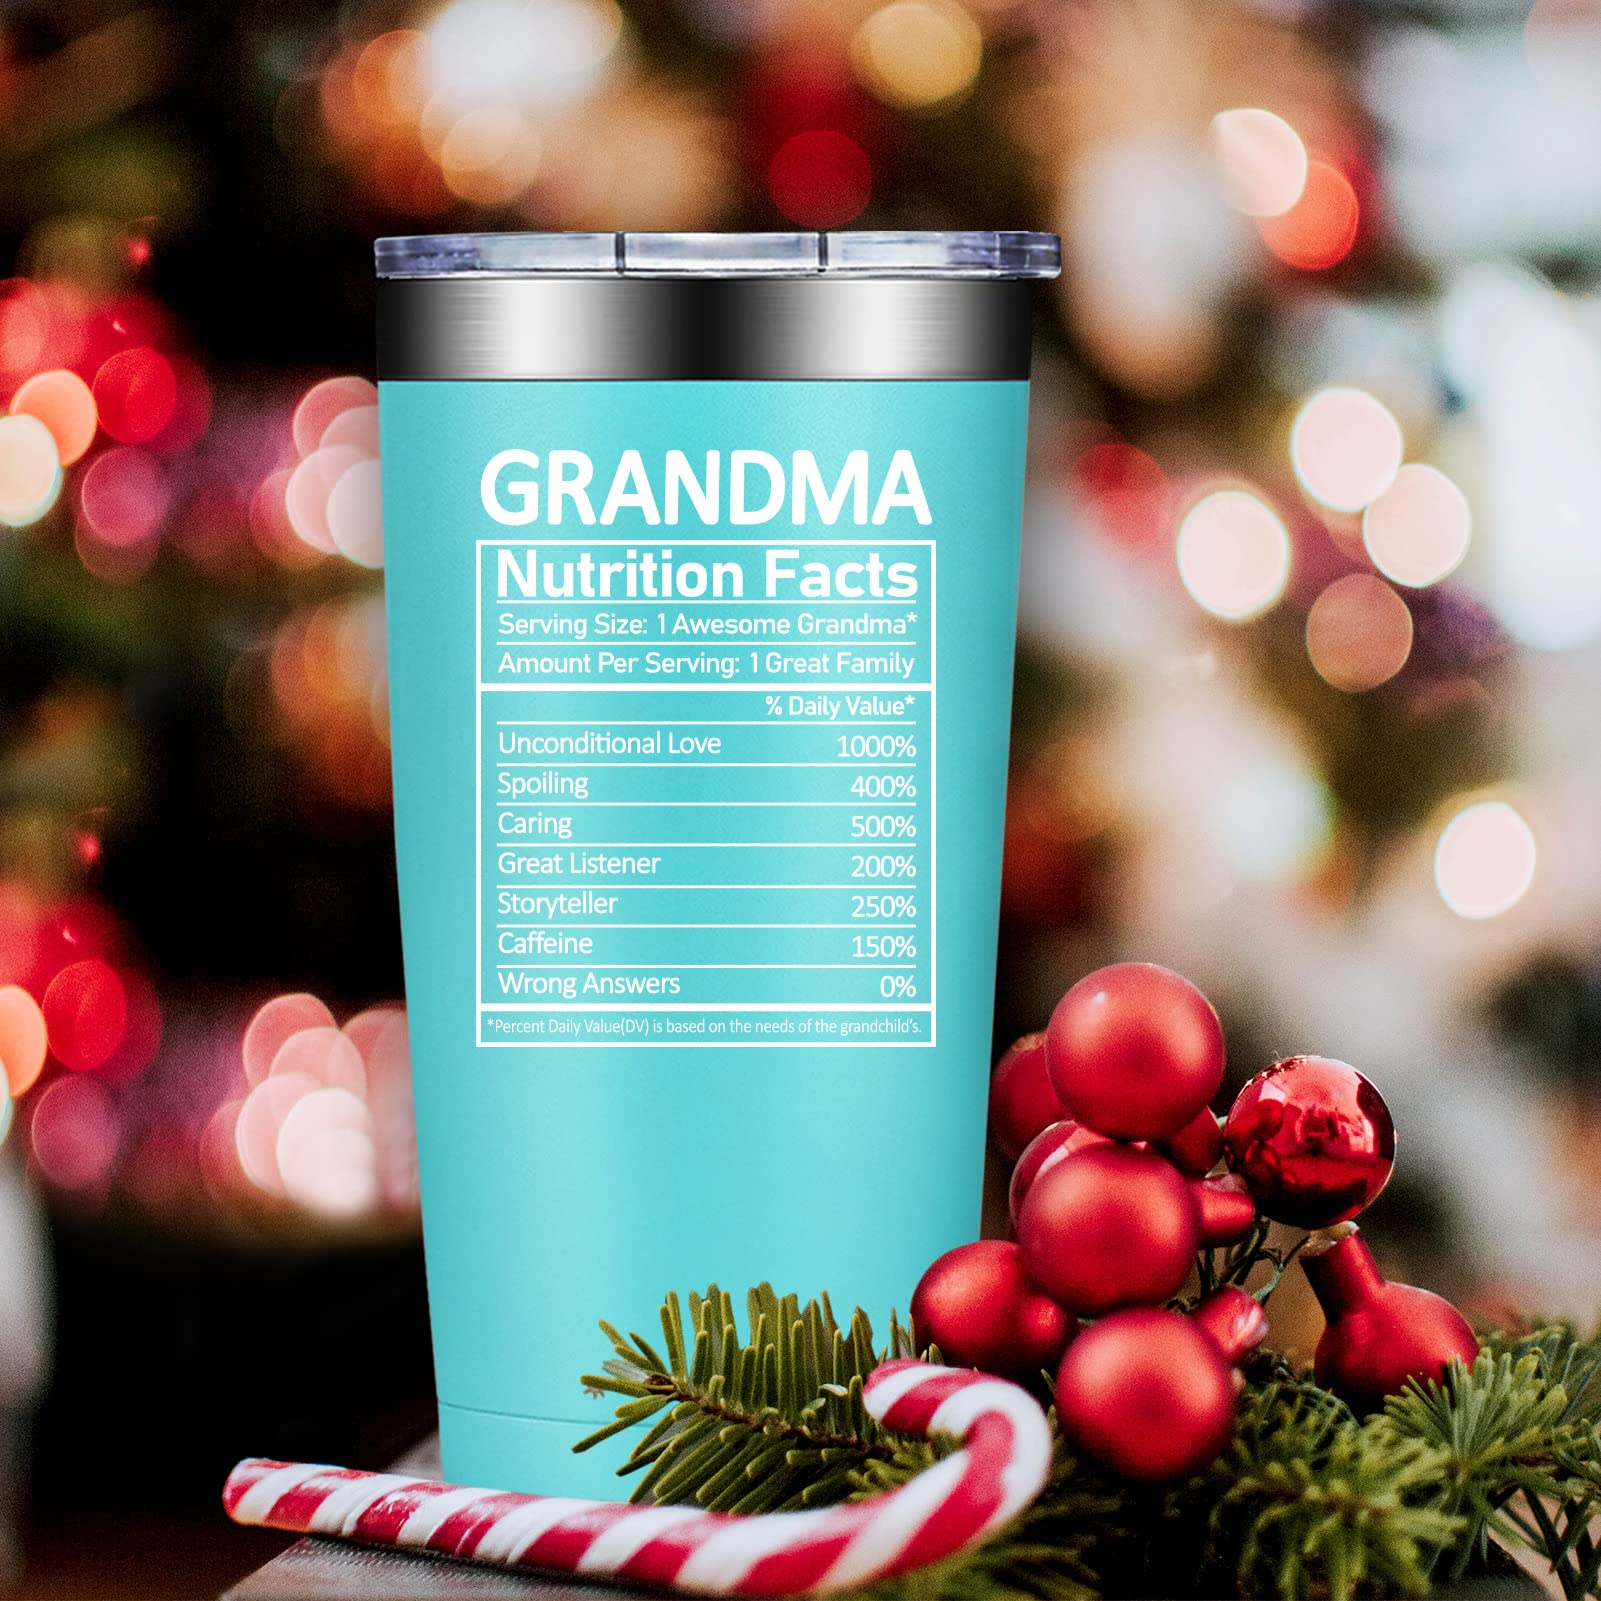 DOEARTE Gifts for Grandma - Mothers Day, Christmas, Birthday Gifts for Grandma from Granddaughter, Grandson, Grandchildren - Grandmother Gift Ideas - 20oz Grandma Tumbler